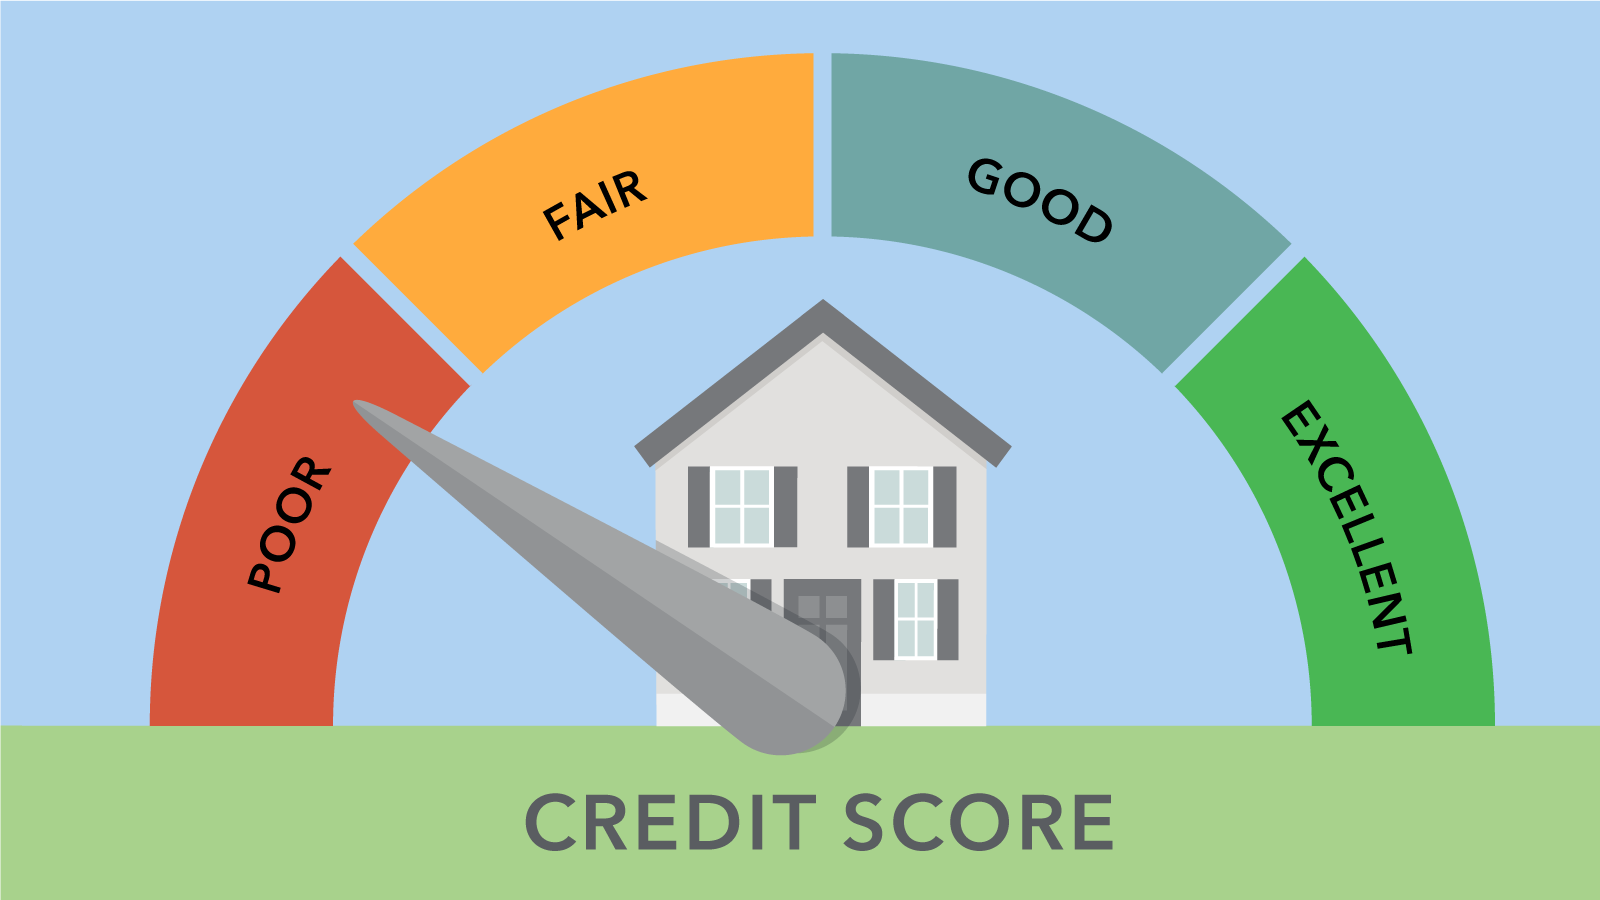 Credit score illustration